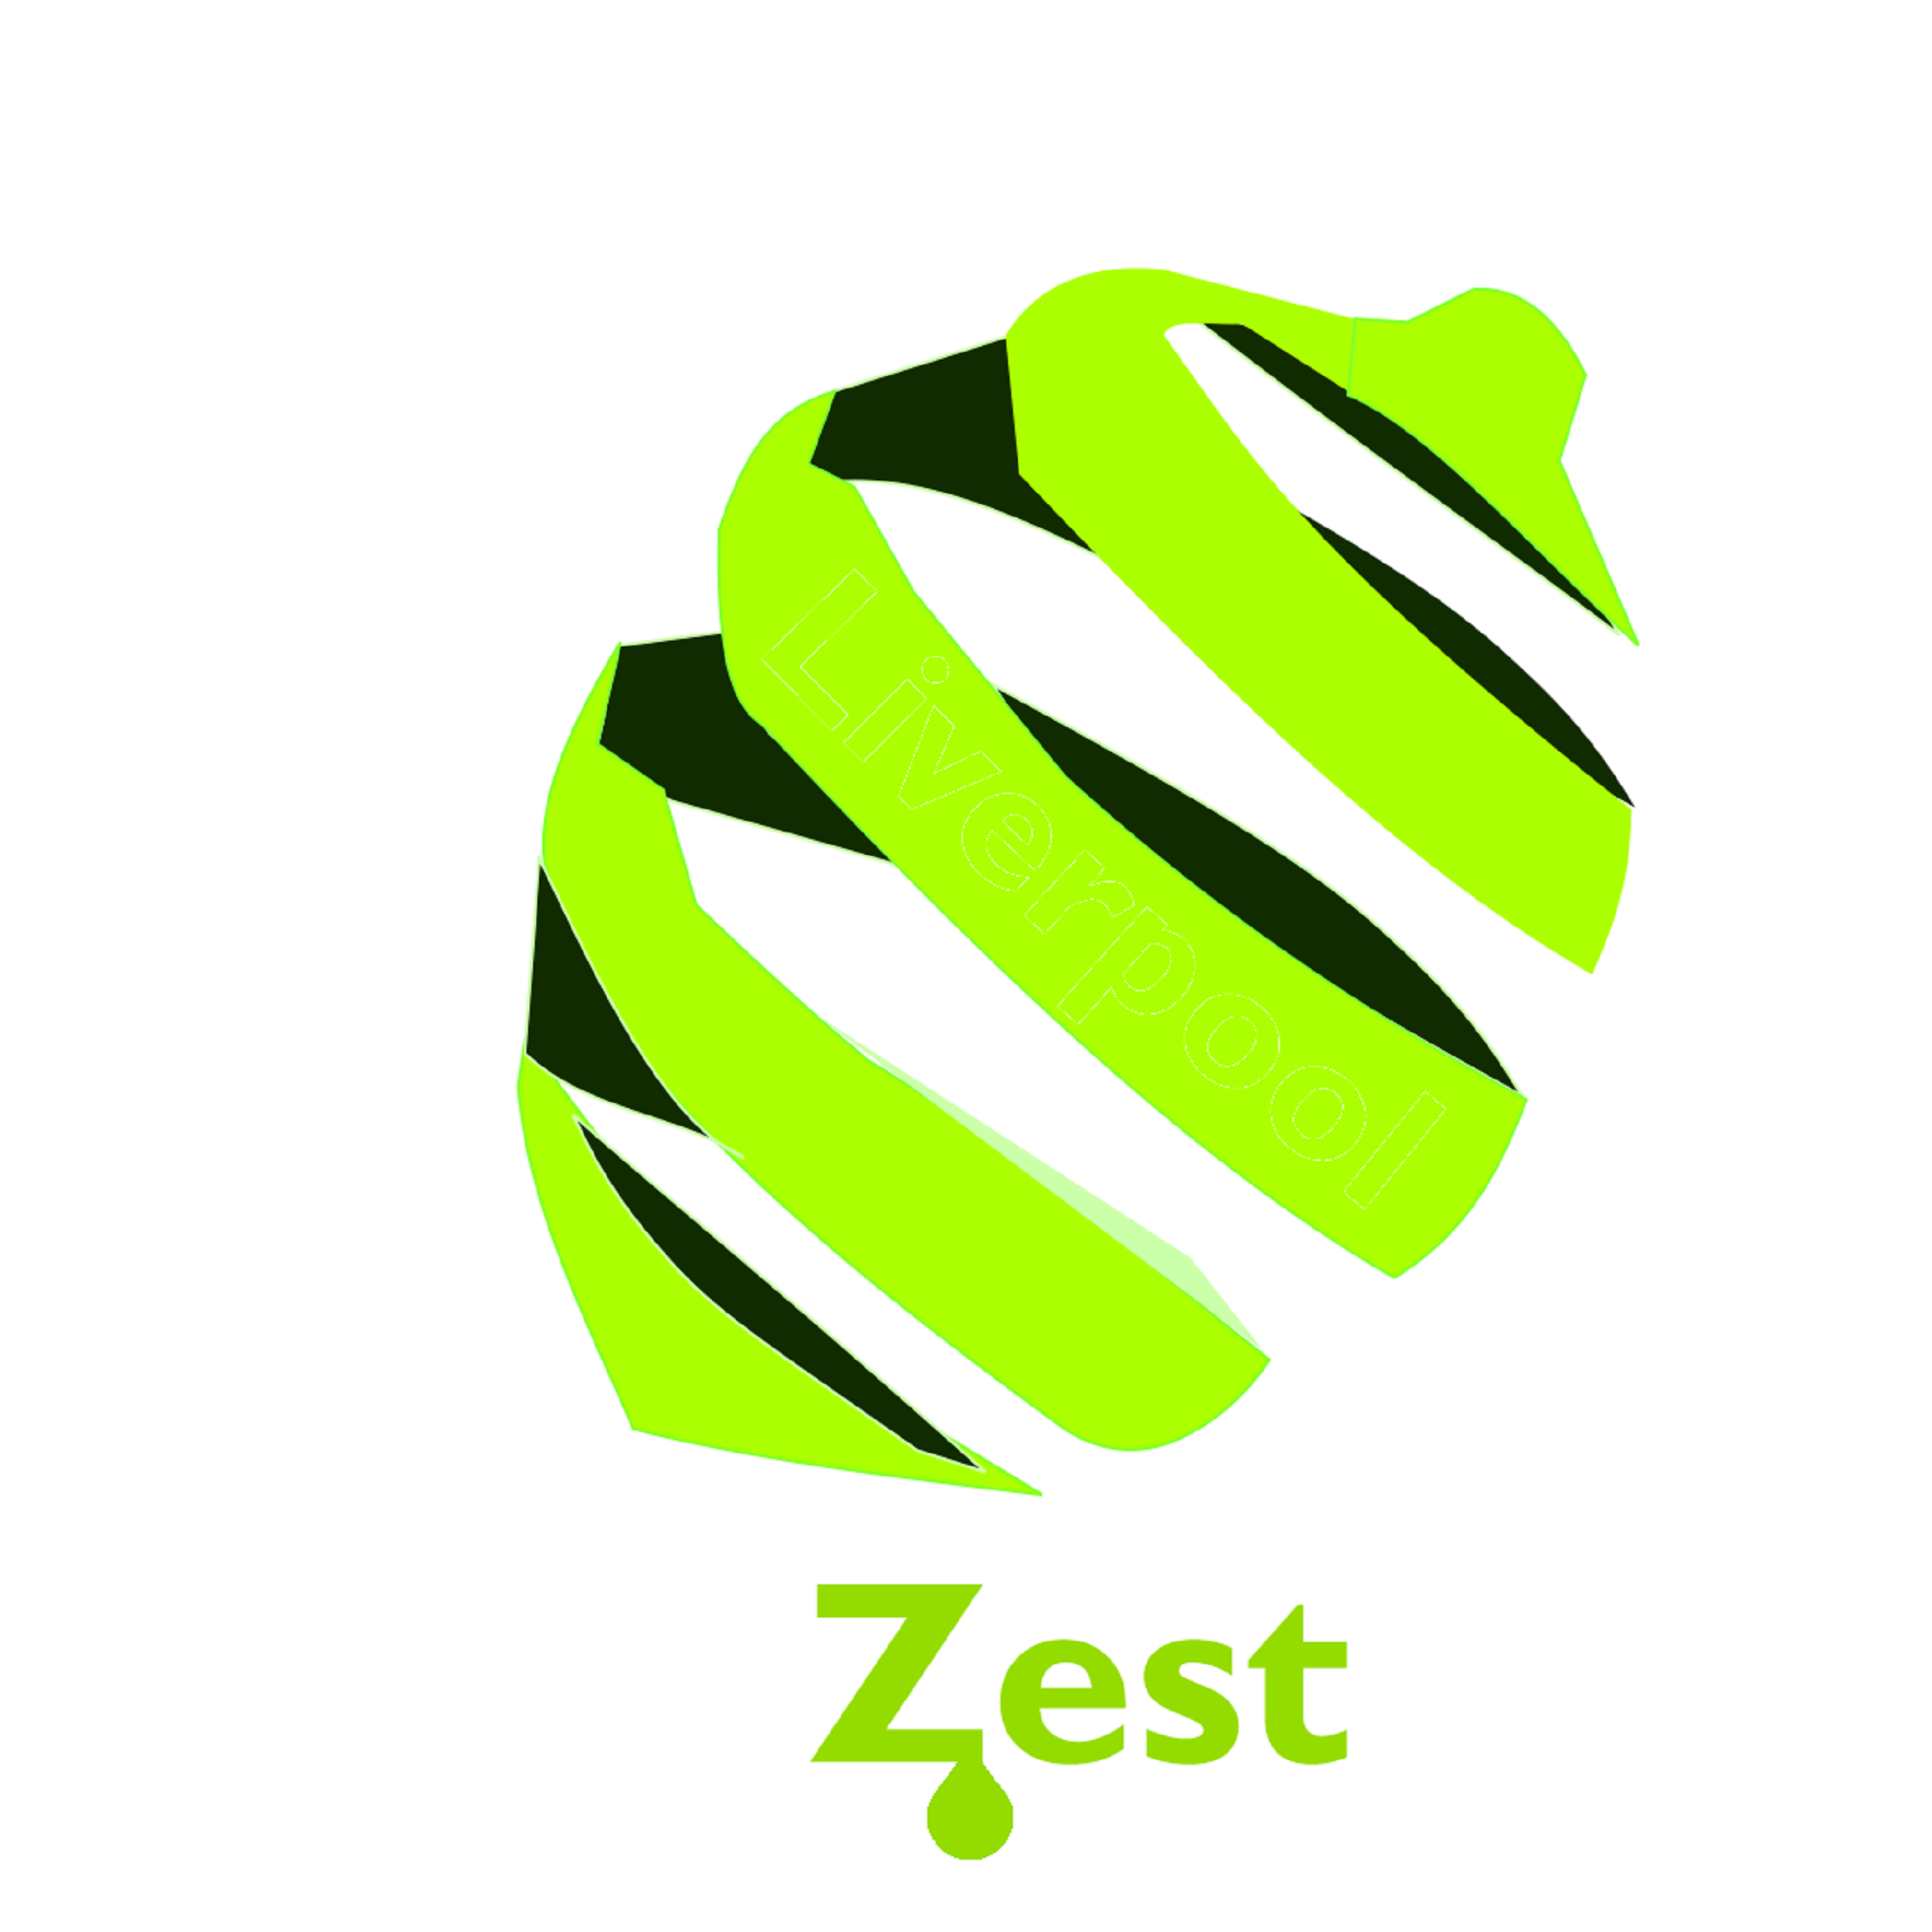 Zest Liverpool Limited